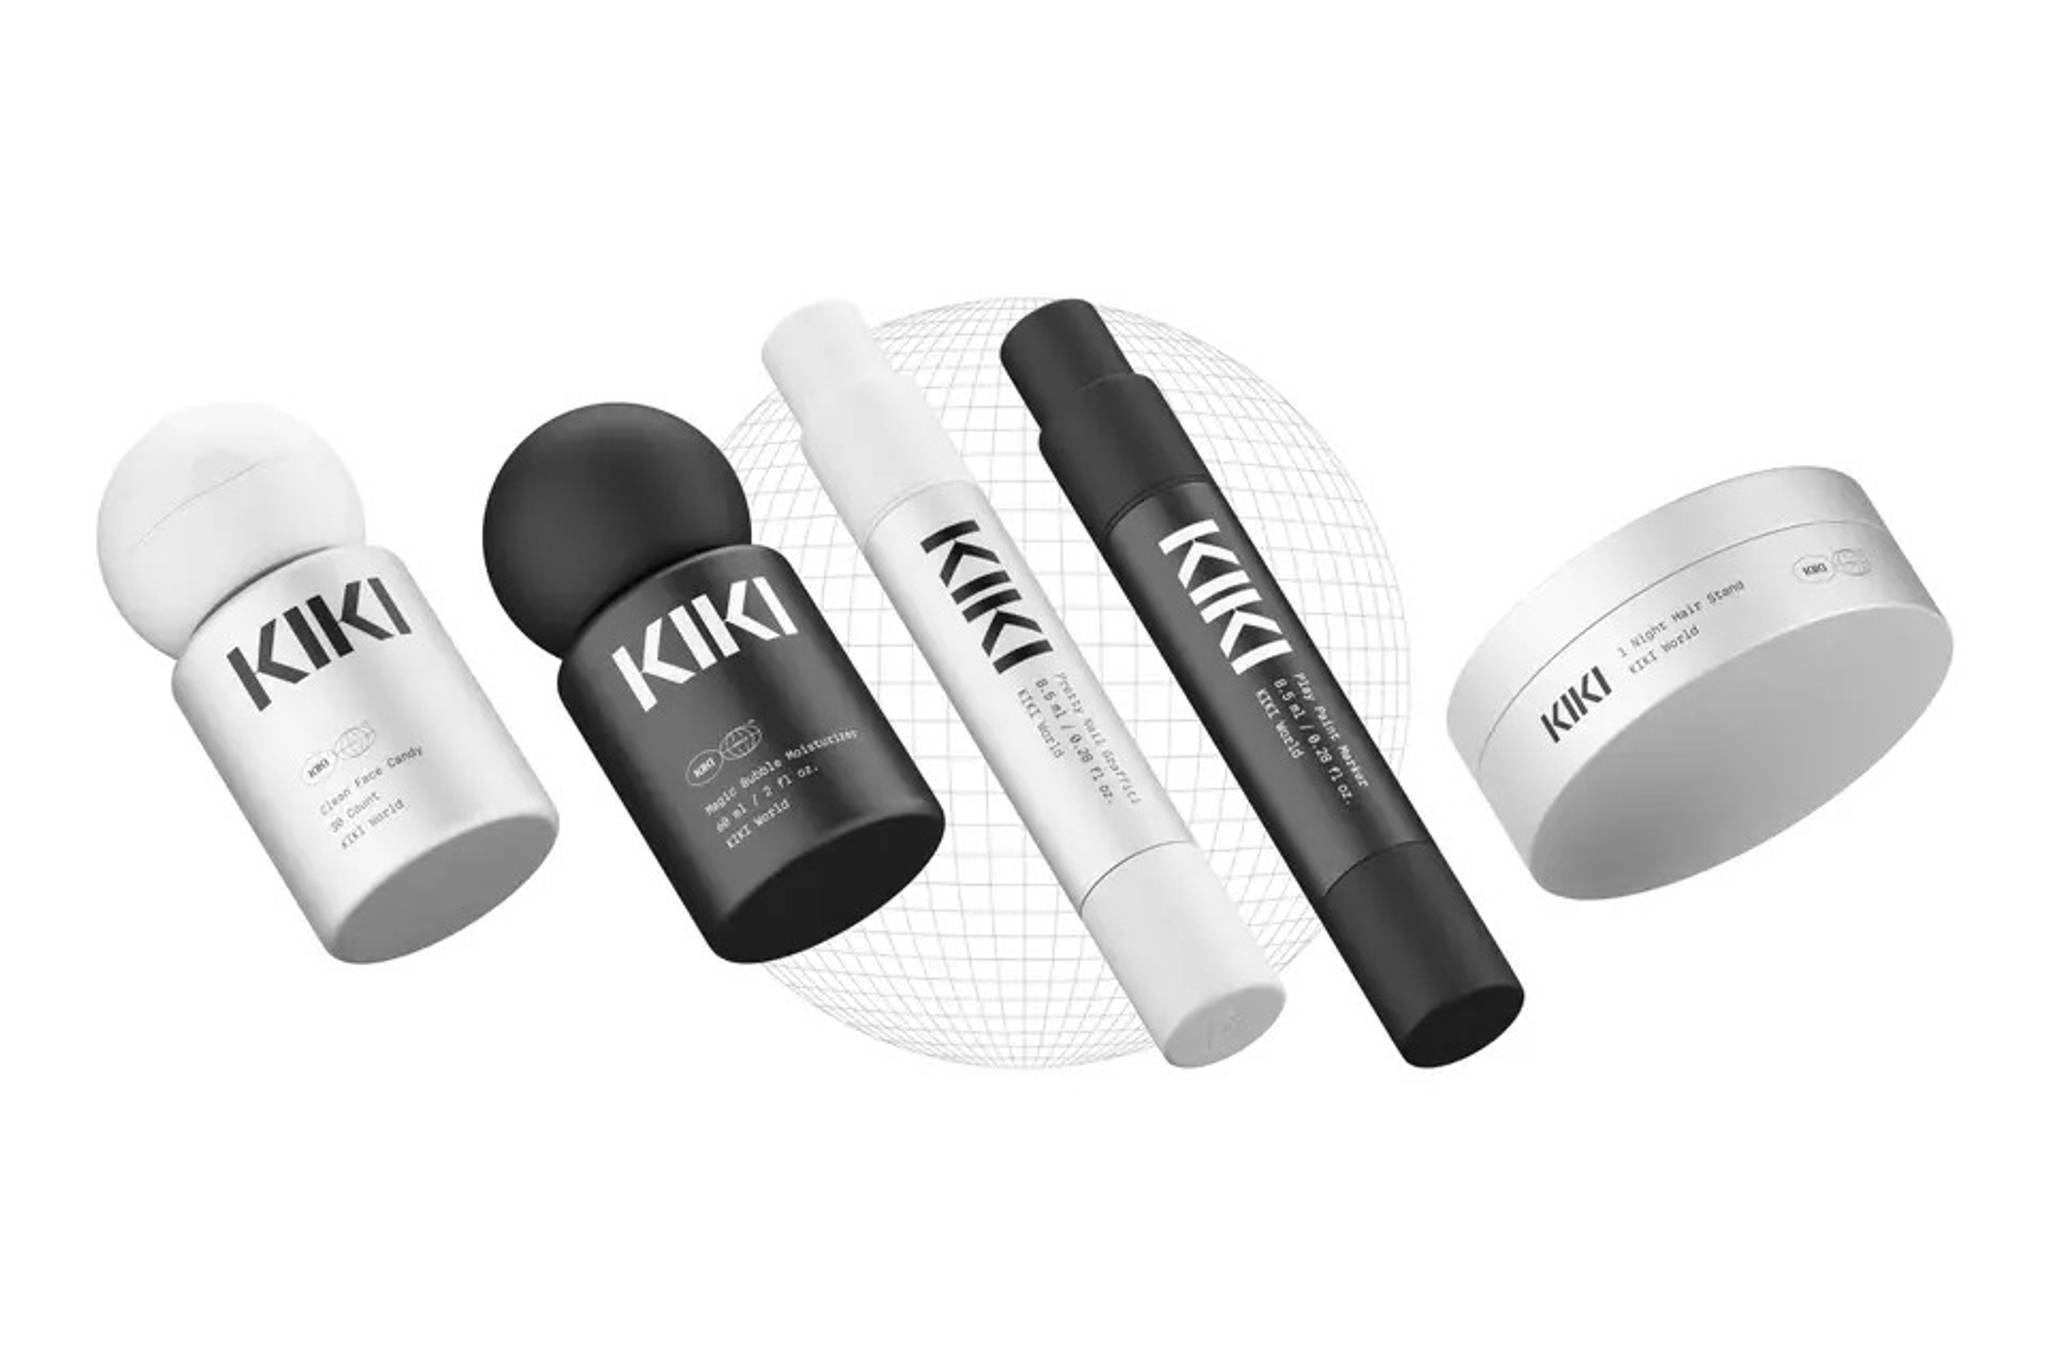 KIKI World hands creative control to its customers